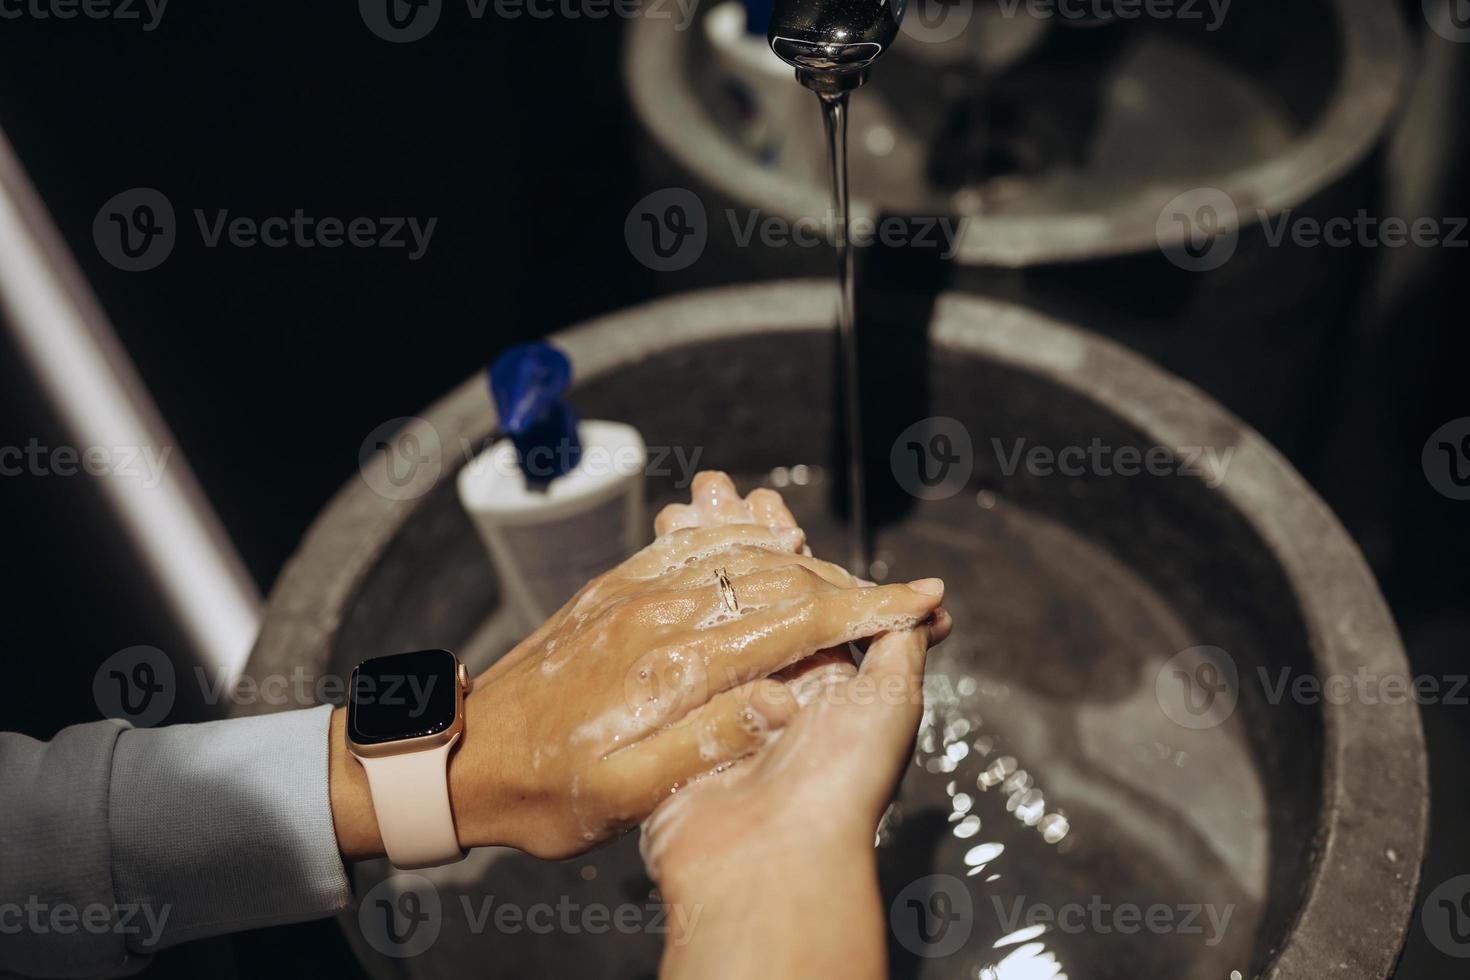 Man washing hands to protect against the coronavirus photo